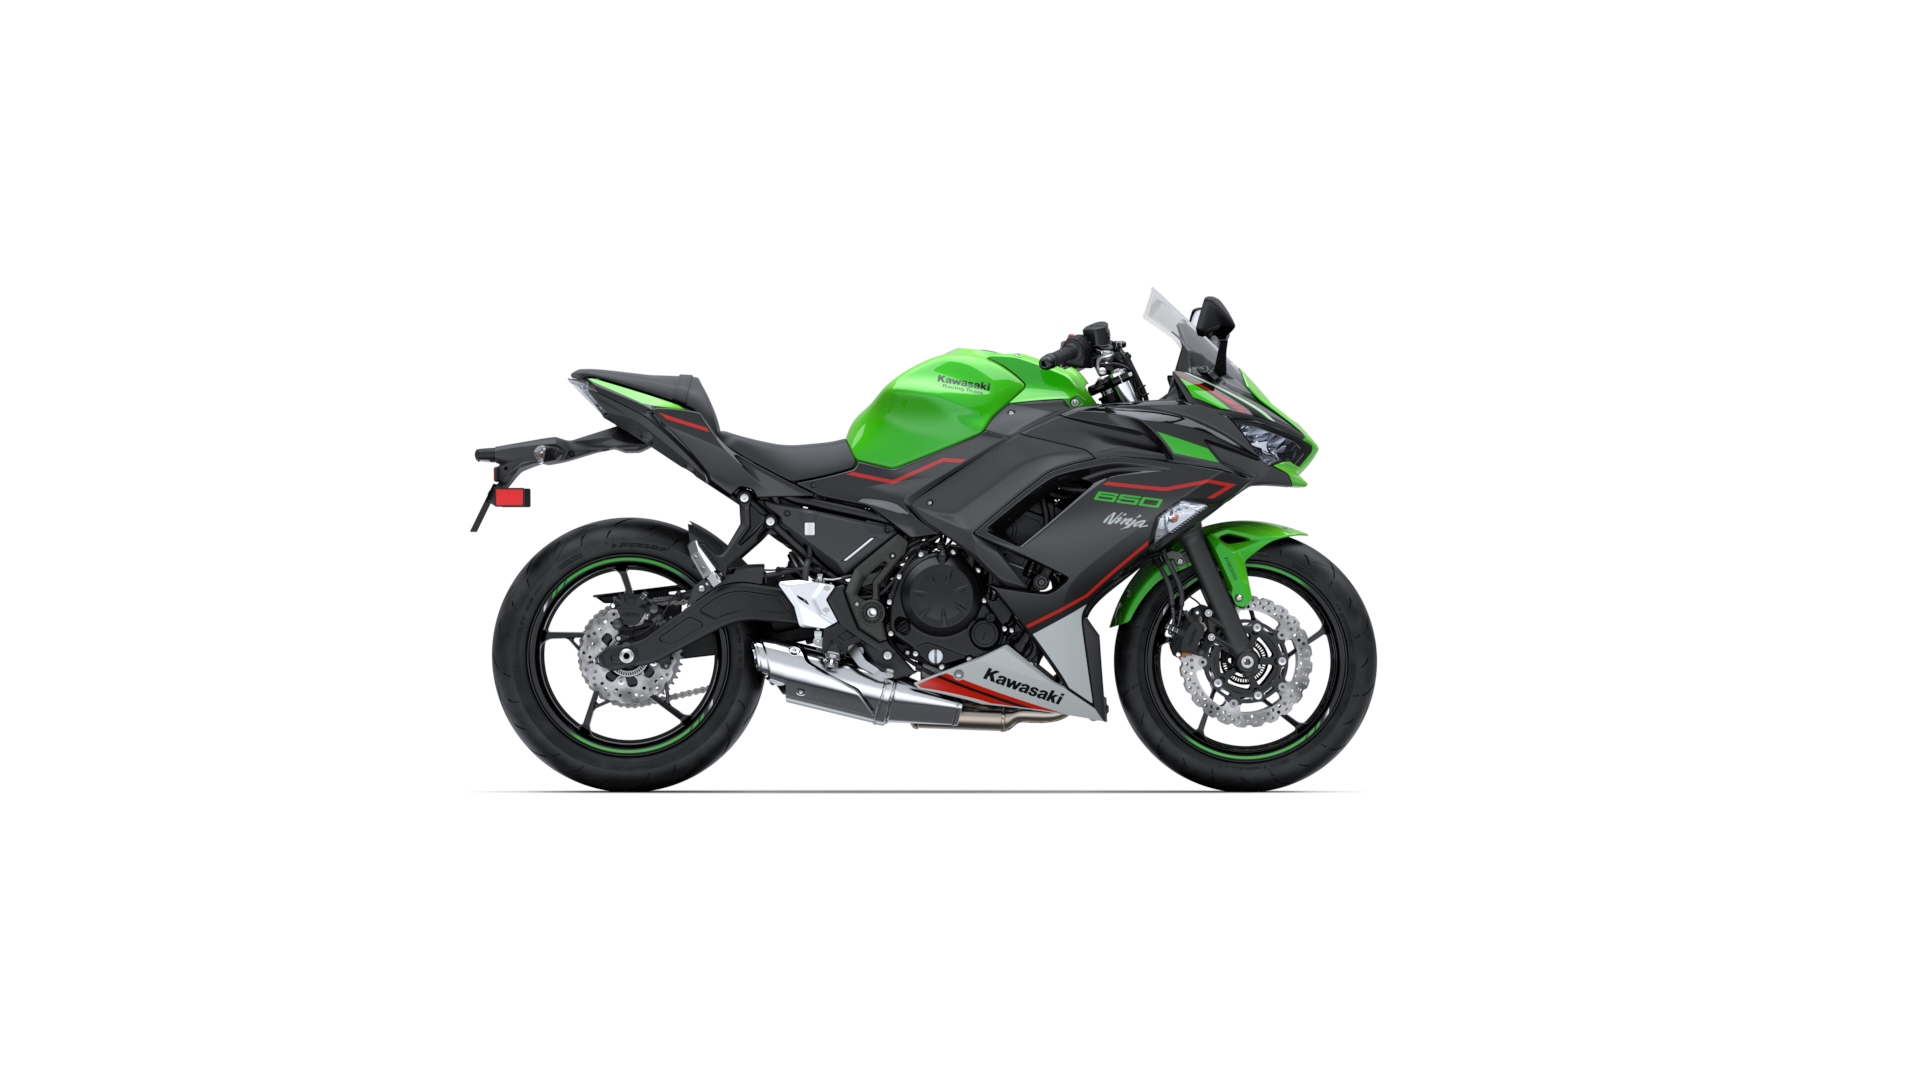 Converge neutral MP Kawasaki Ninja® 650 ABS KRT Edition | Motorcycle | Legendary Lineage